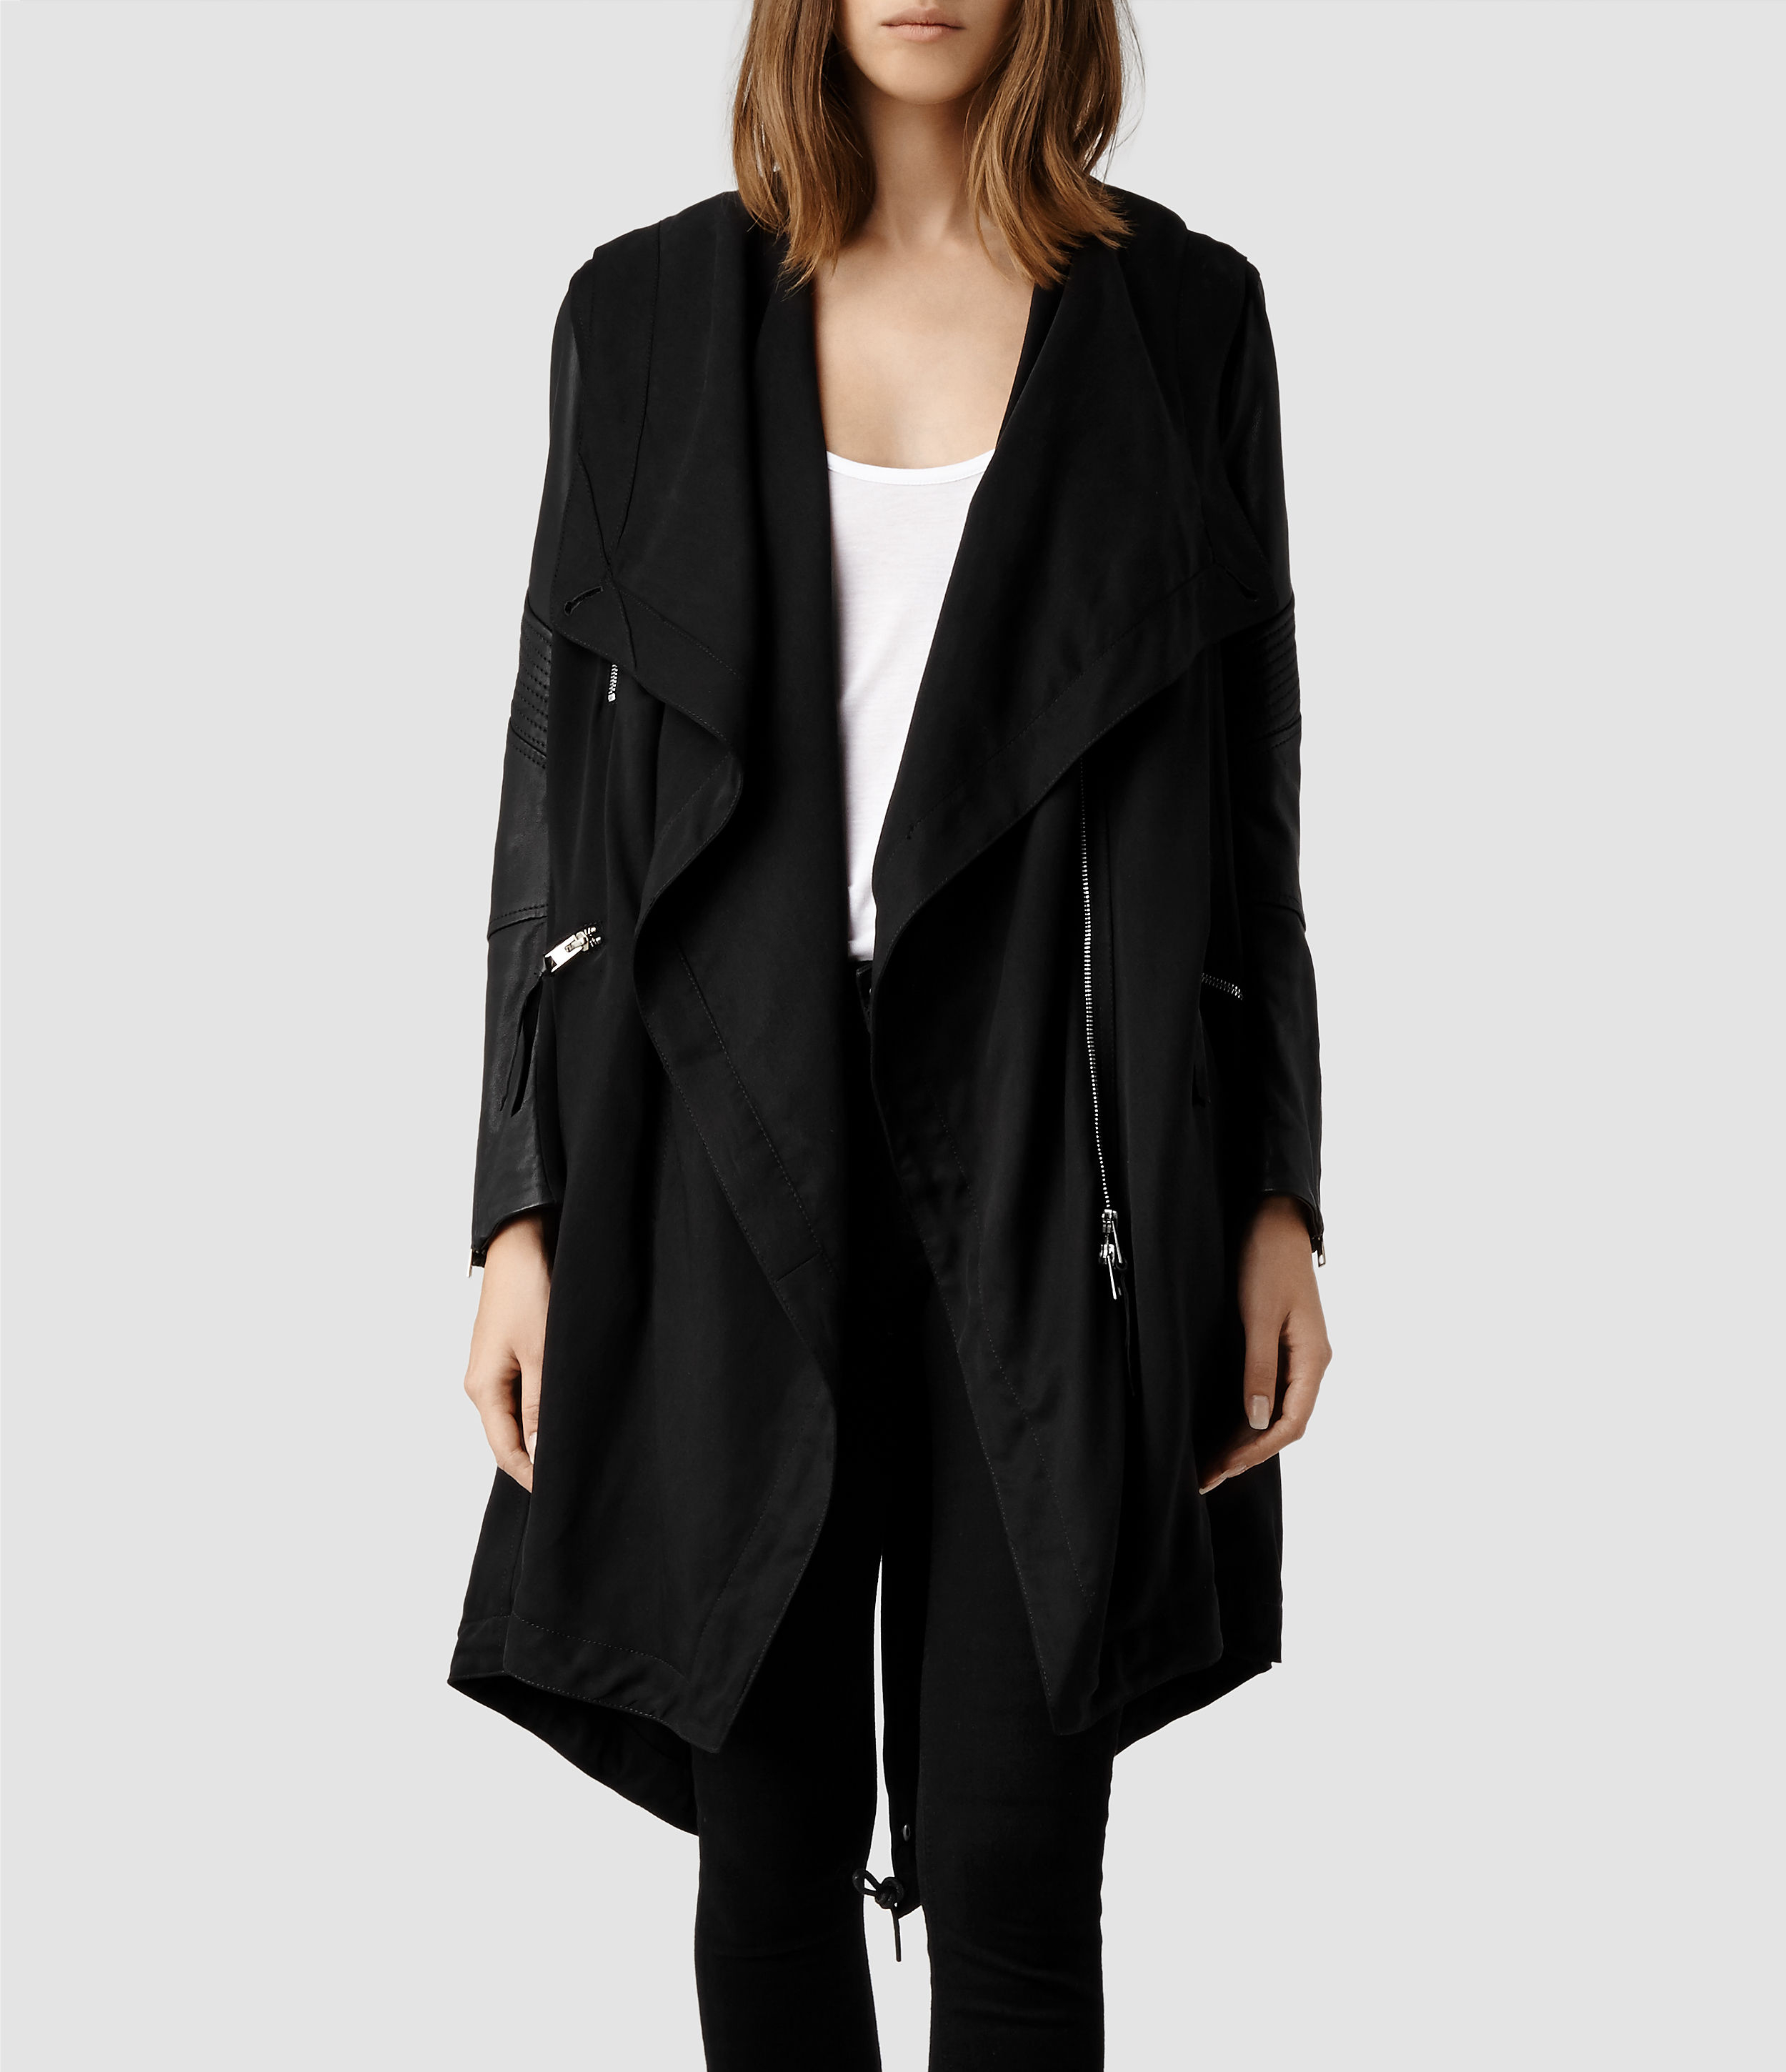 Lyst - AllSaints Gion Parka Jacket in Black